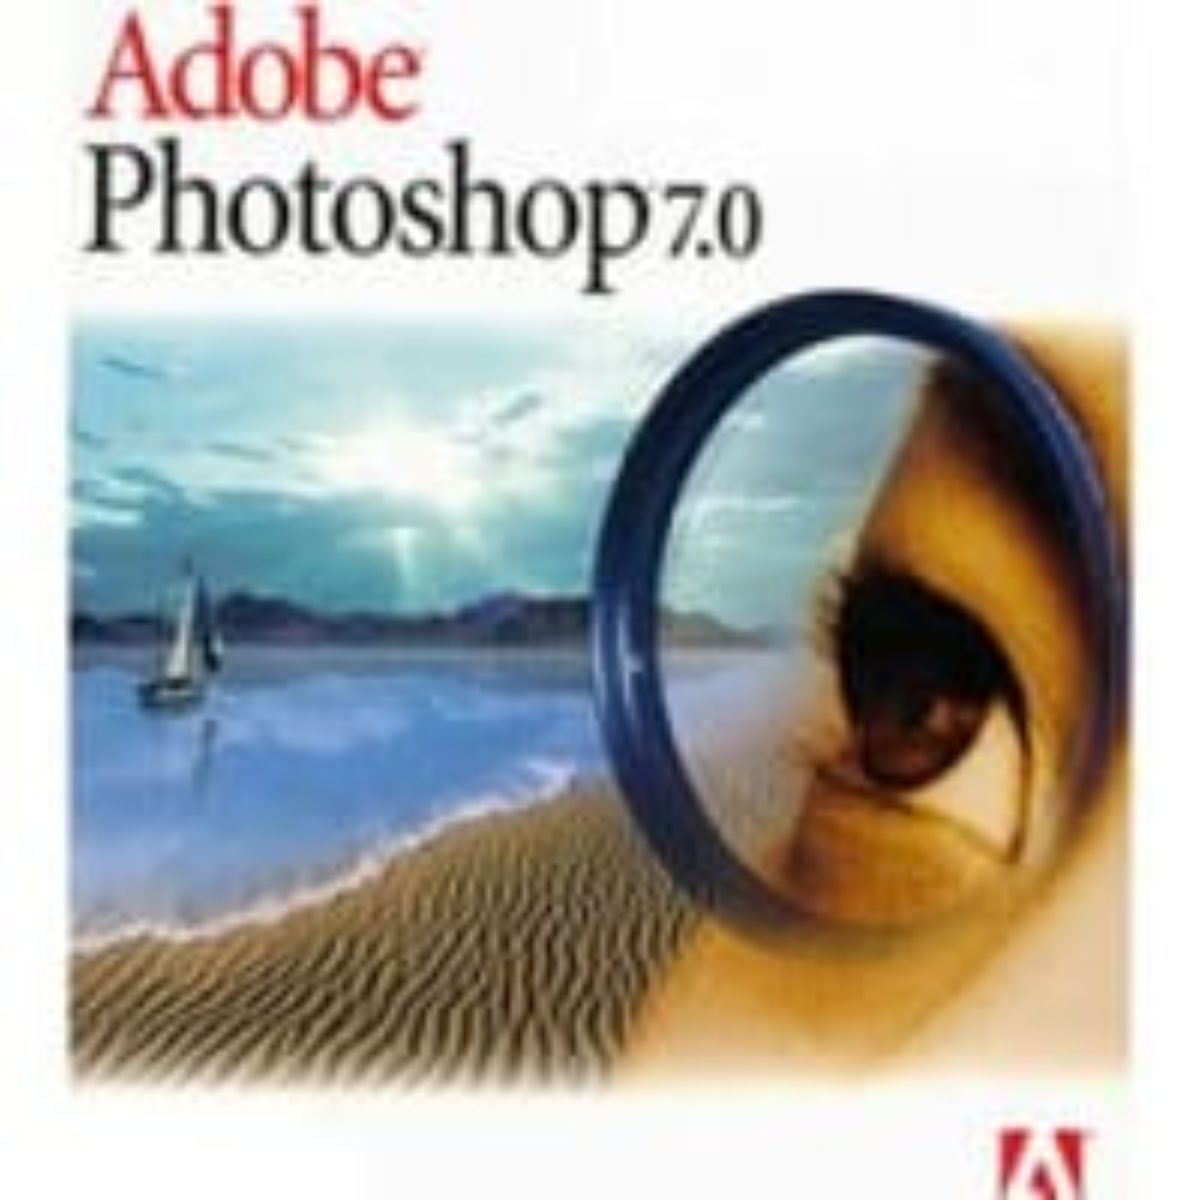 Adobe Photoshop 7 0 Download For Pc Windows 7 10 8 32 64 Bit